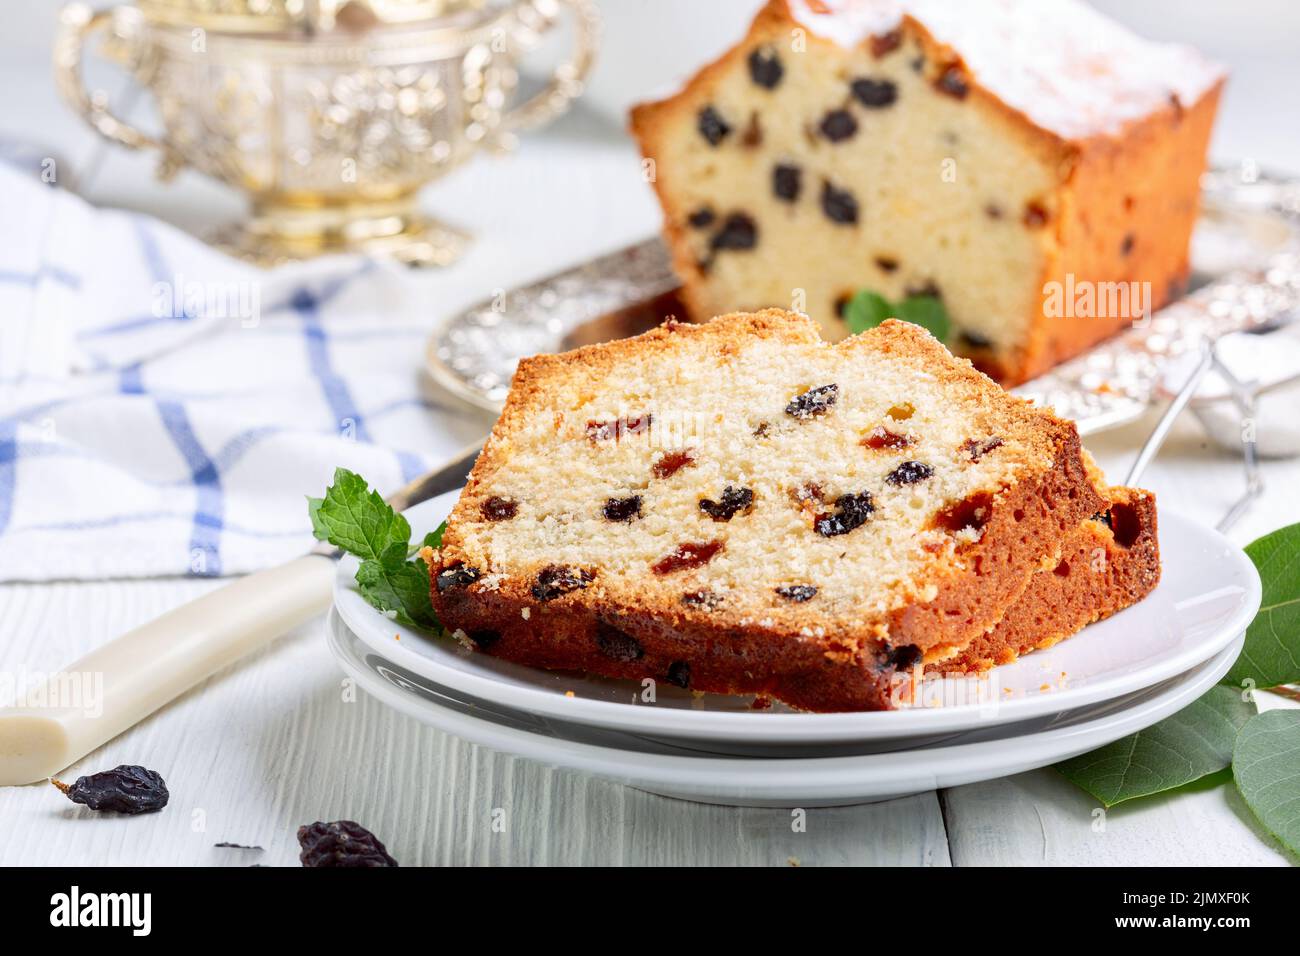 Homemade fruit cake with raisins. Stock Photo